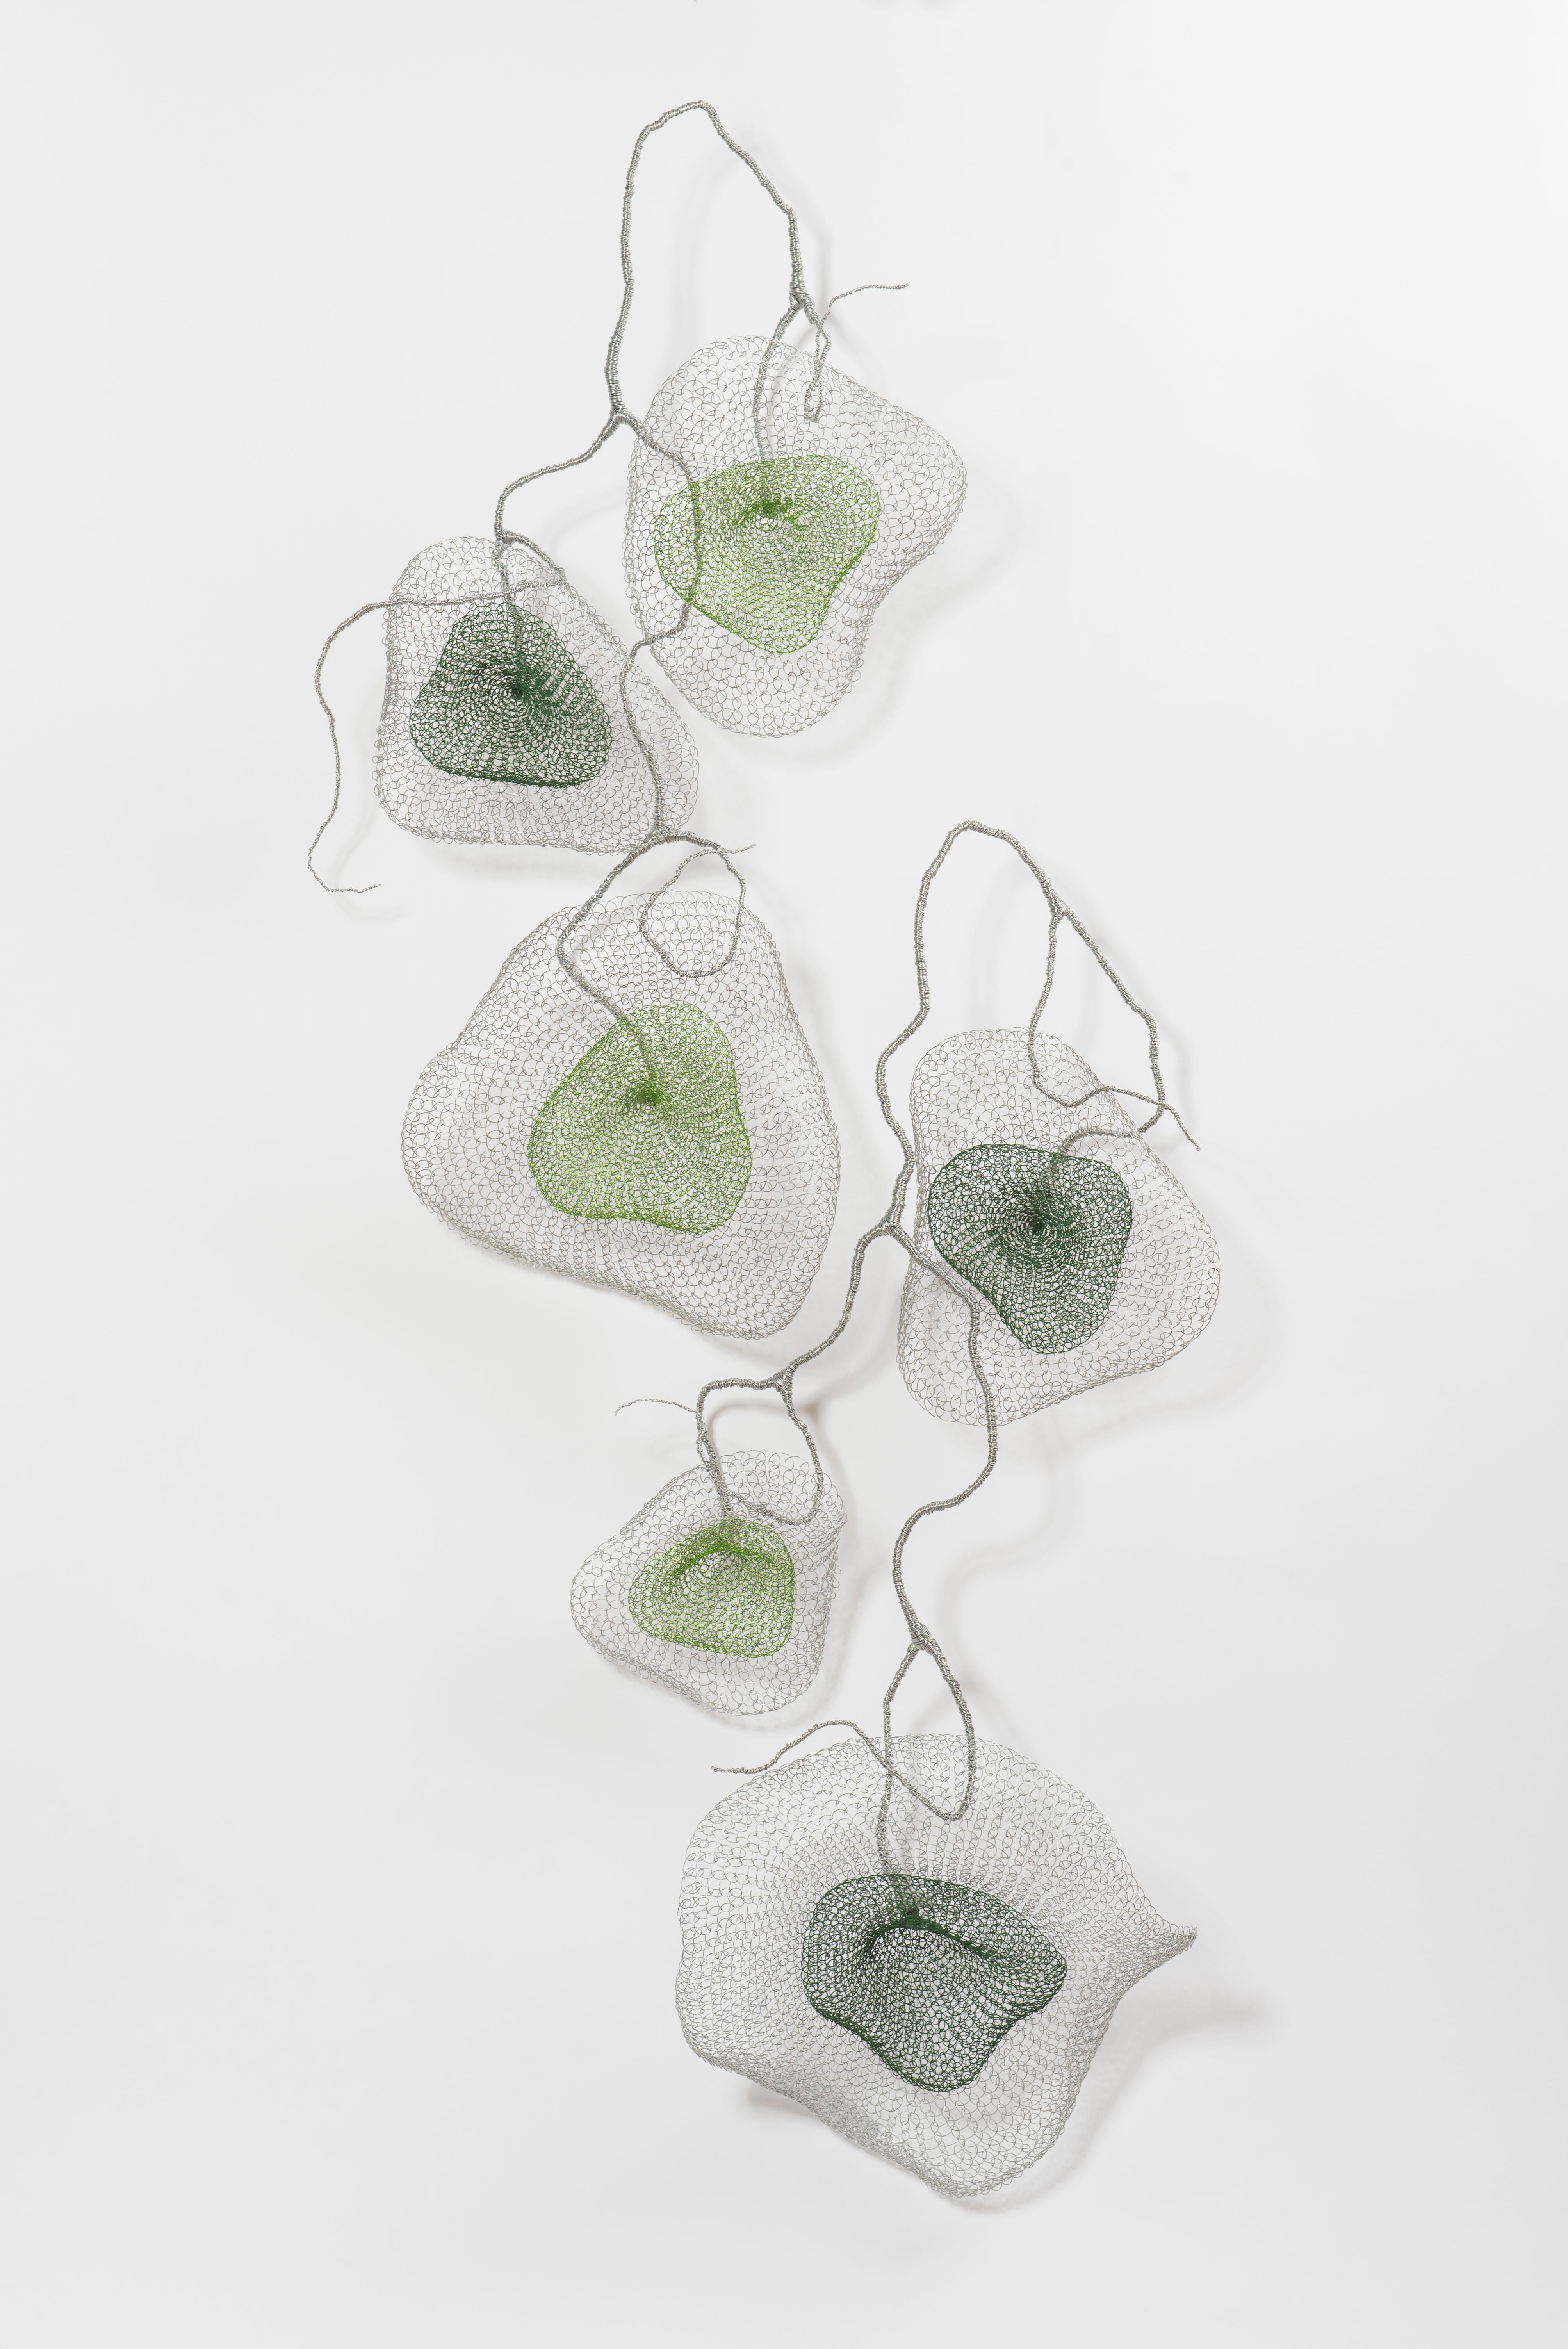 Delphine Grandvaux Still-Life Sculpture - "Ivy" , Transparent Green Metal Wire Abstract Figurative Mesh Sculpture